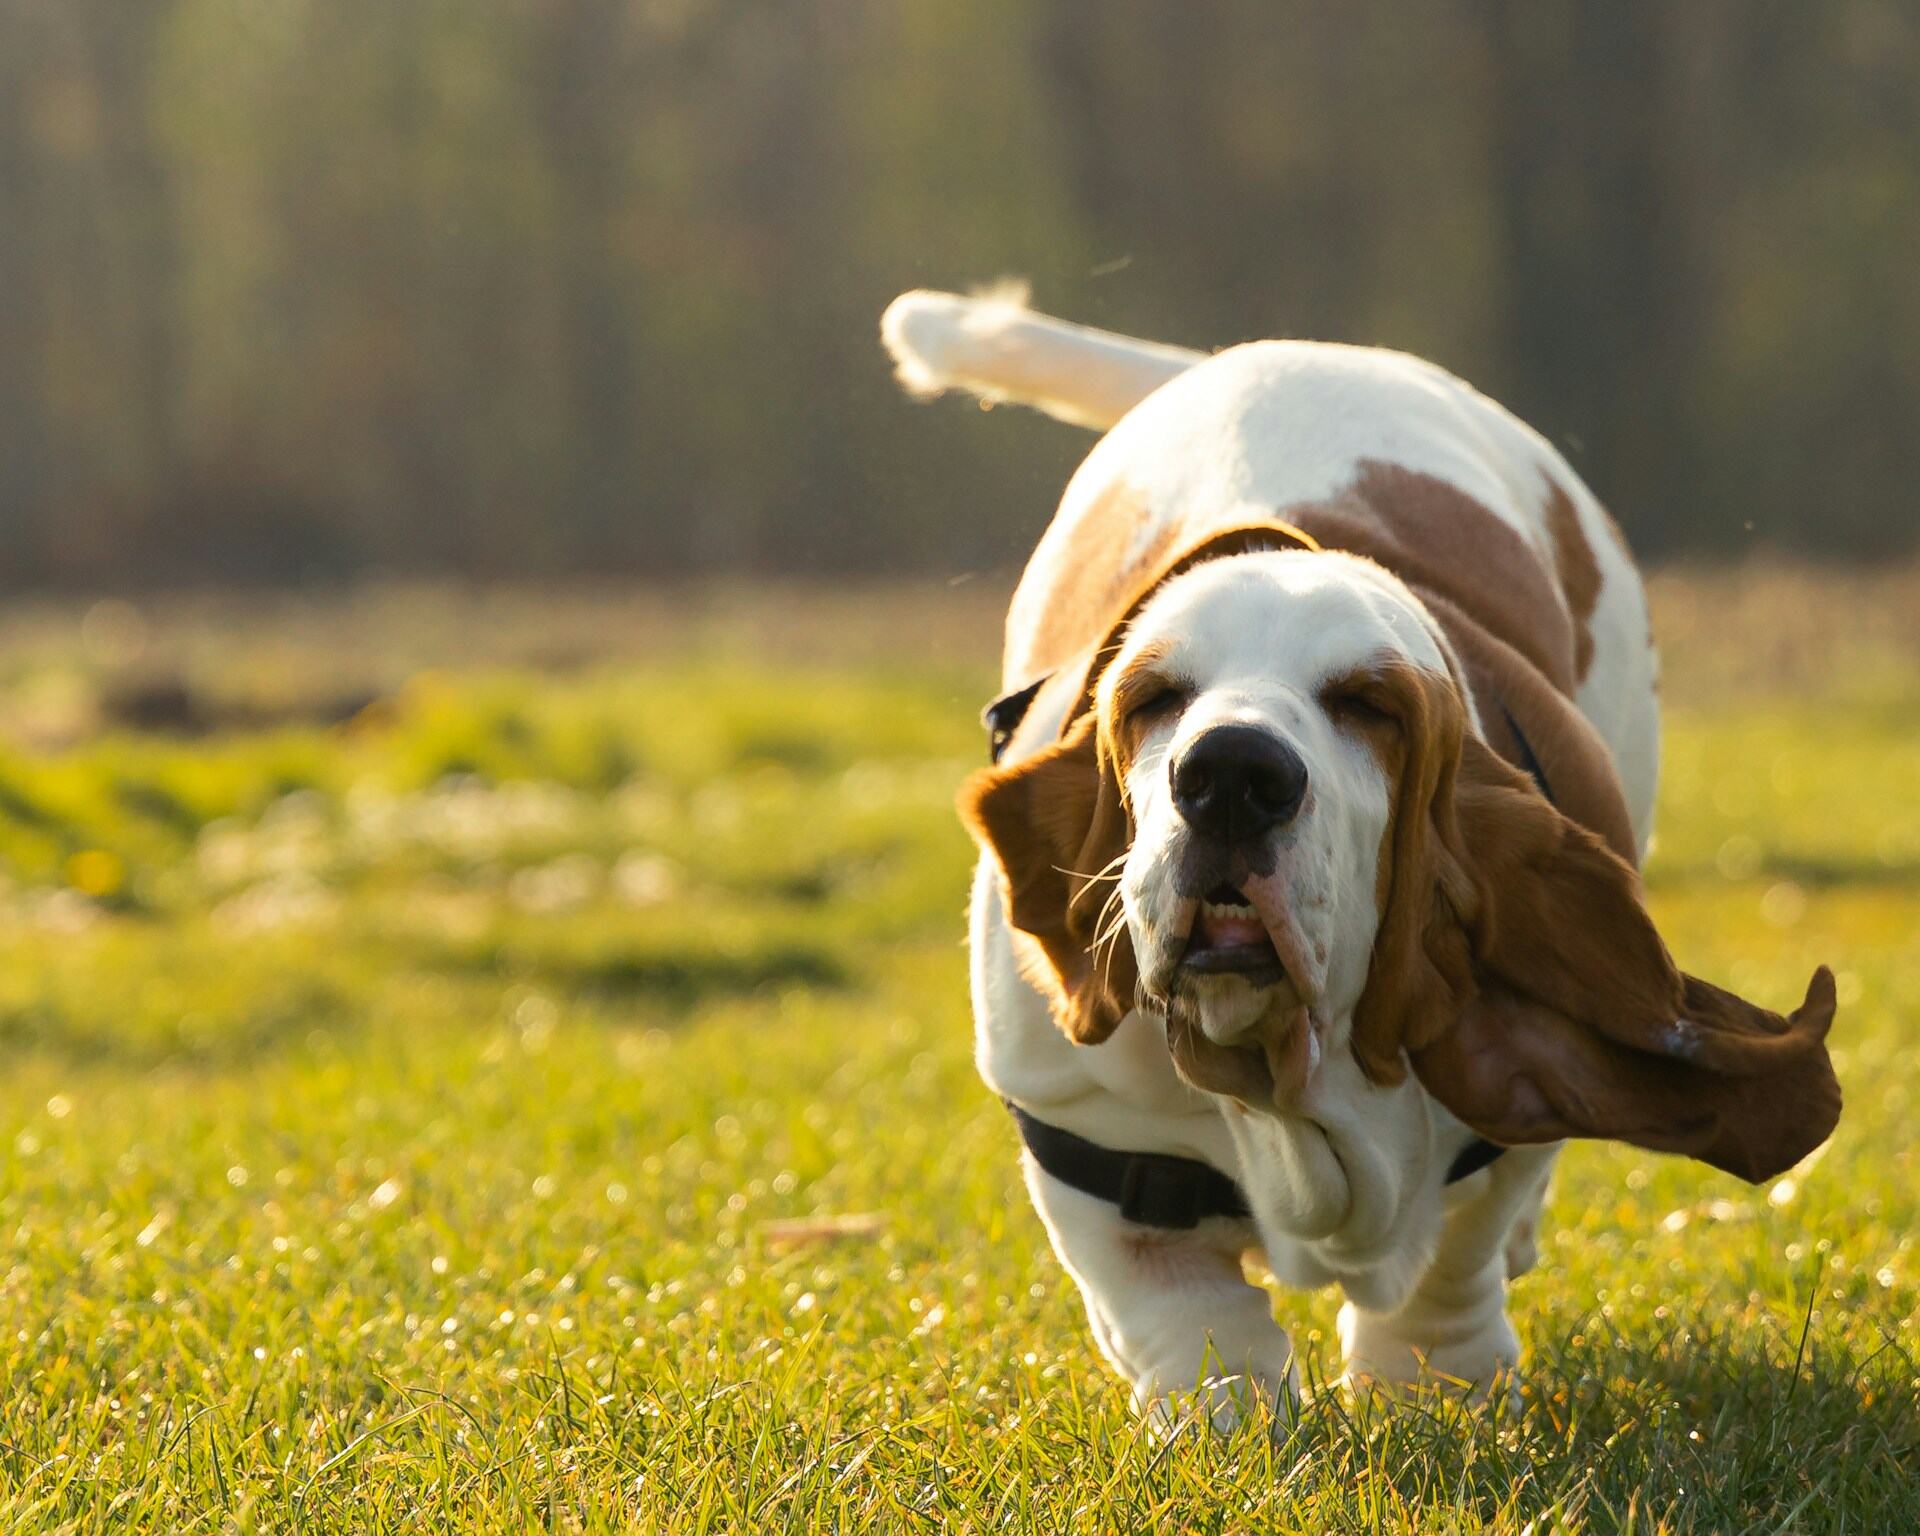 A Basset Hound running through a lawn